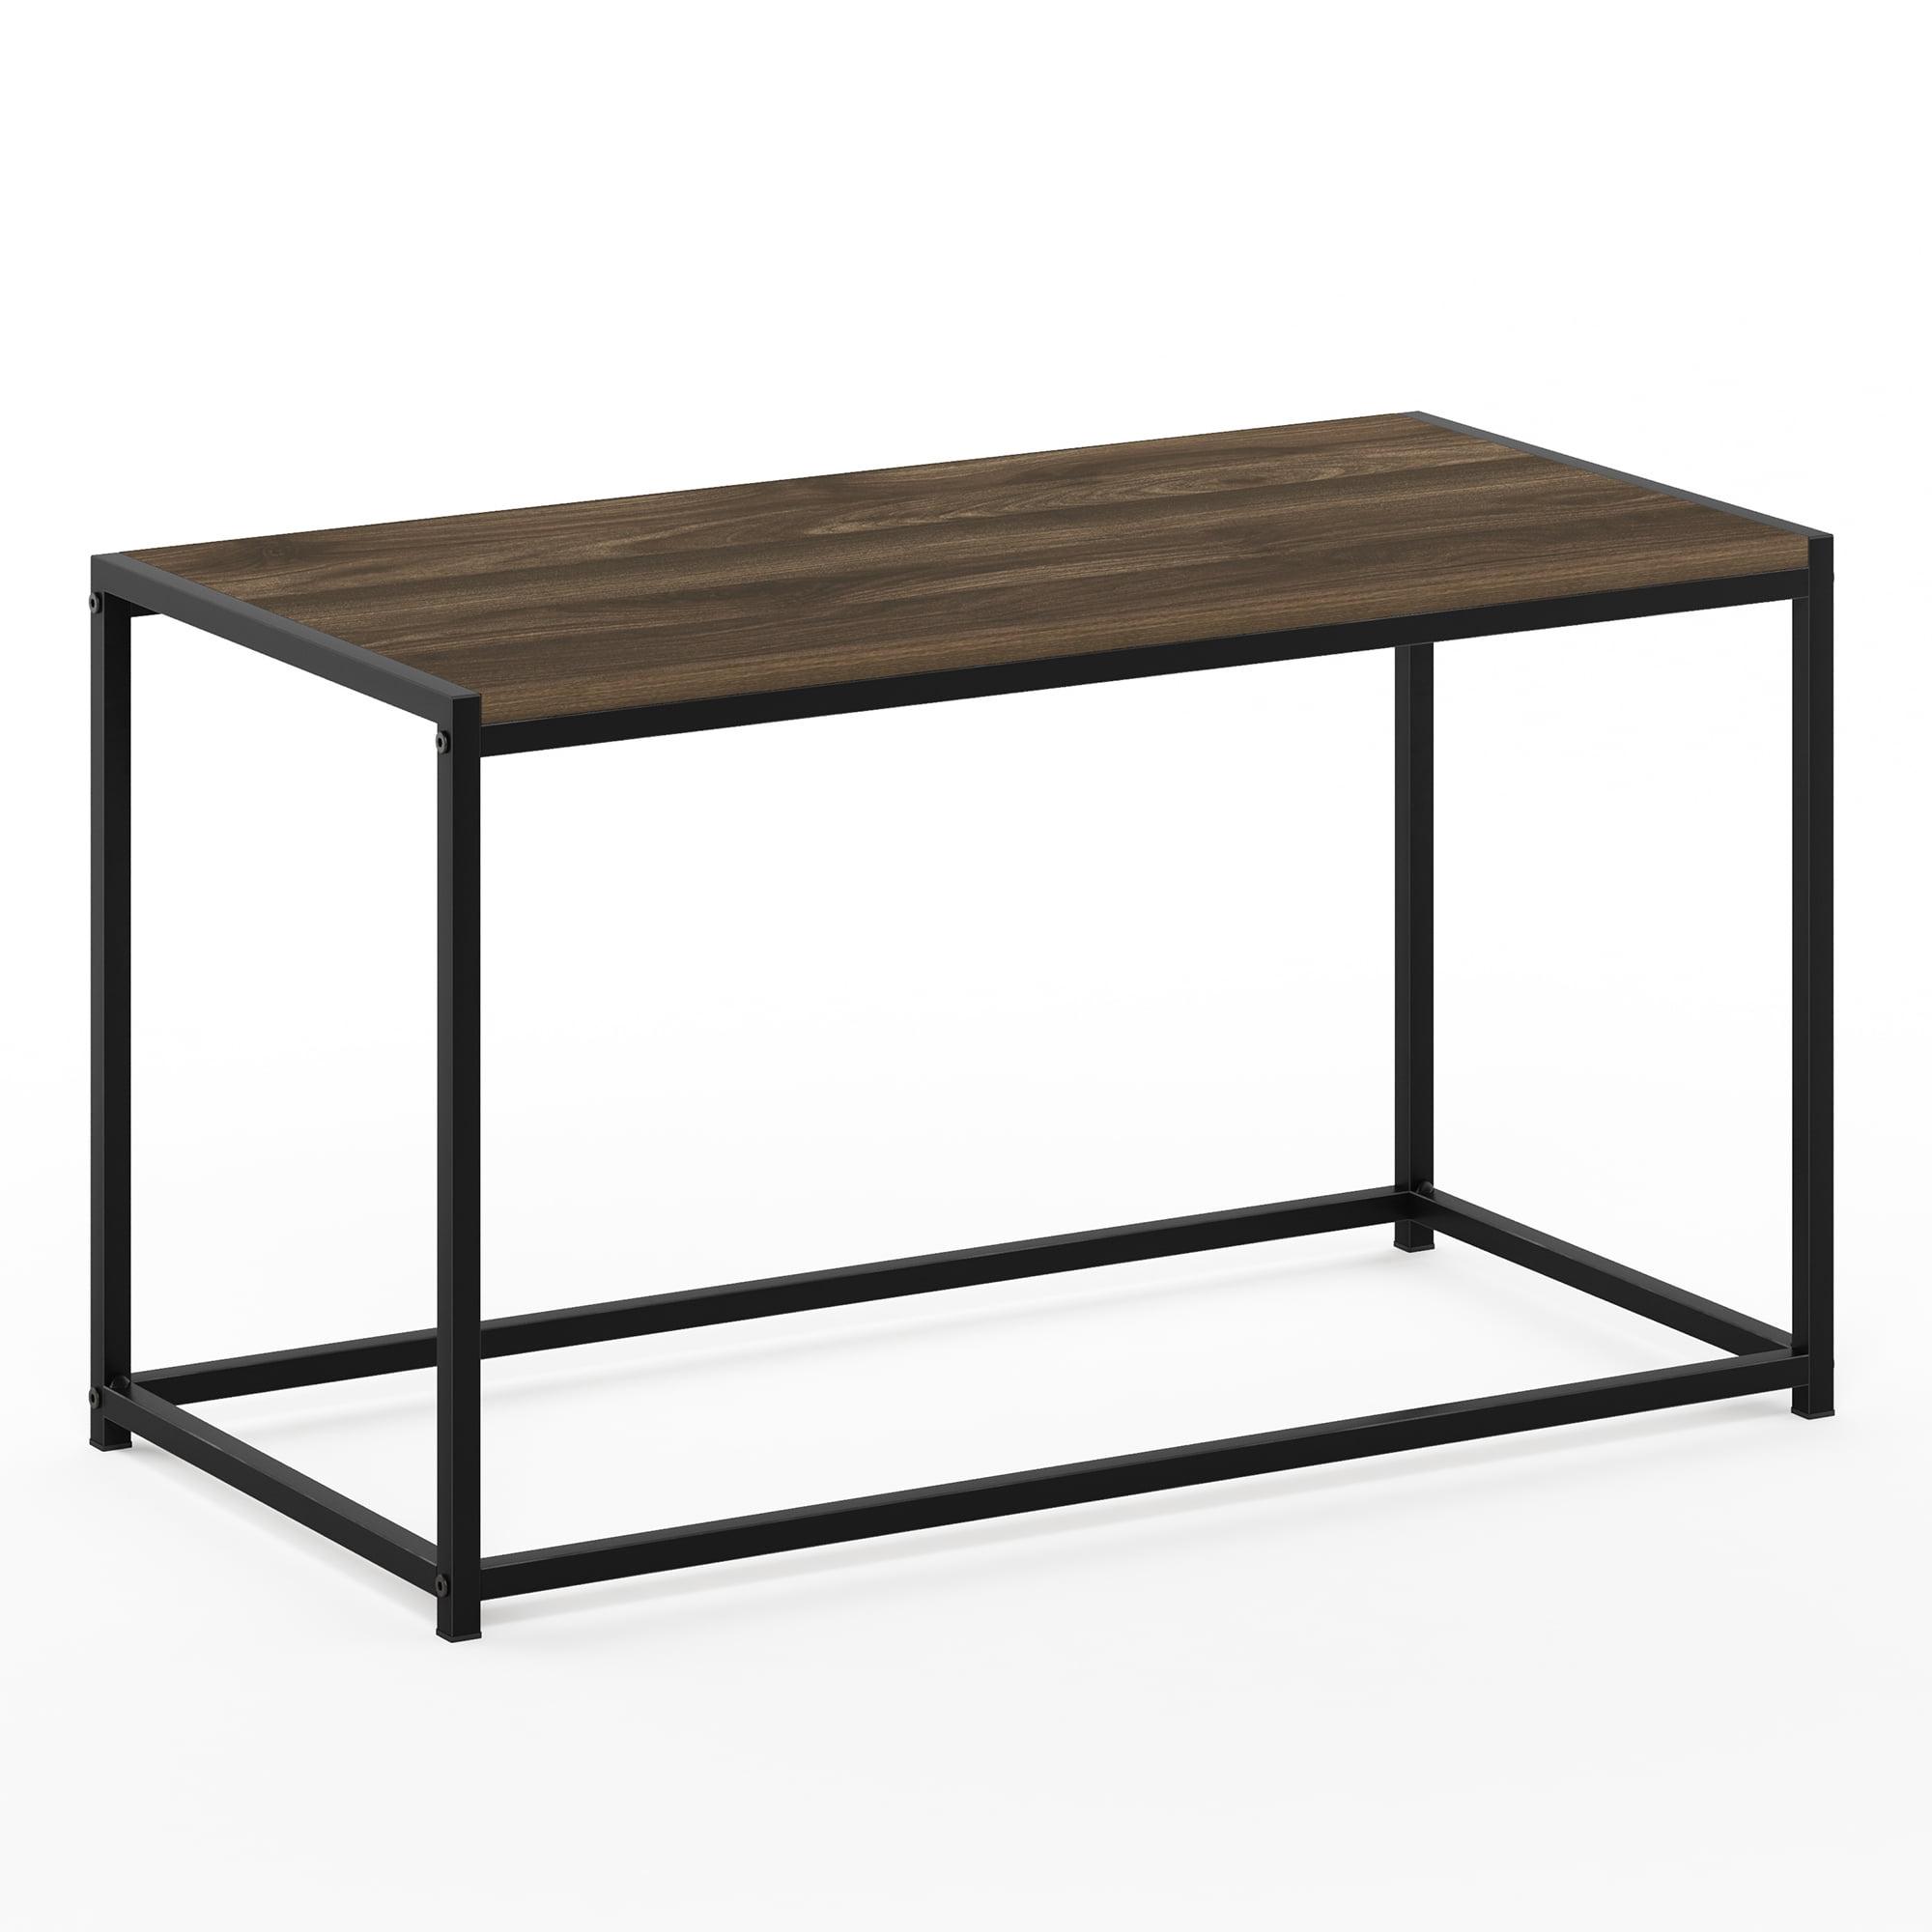 Sleek Walnut & Metal Multifunction Coffee Table for Modern Living